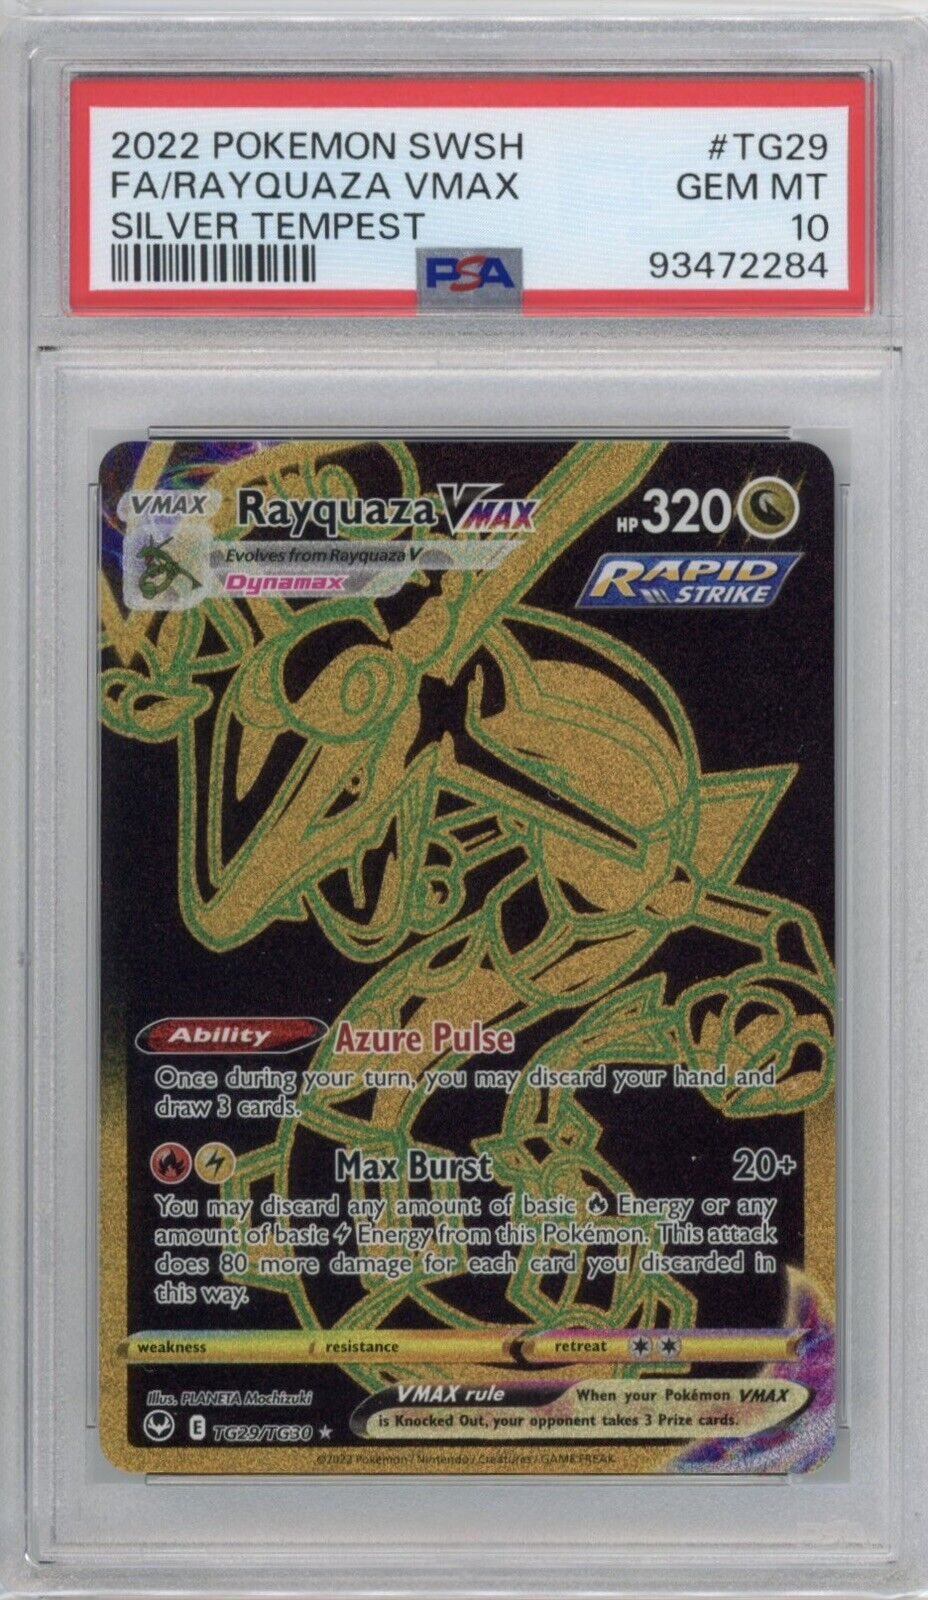 Rayquaza VMAX TG29 Full Art Silver Tempest - Pokemon Card - PSA 10 GEM MINT